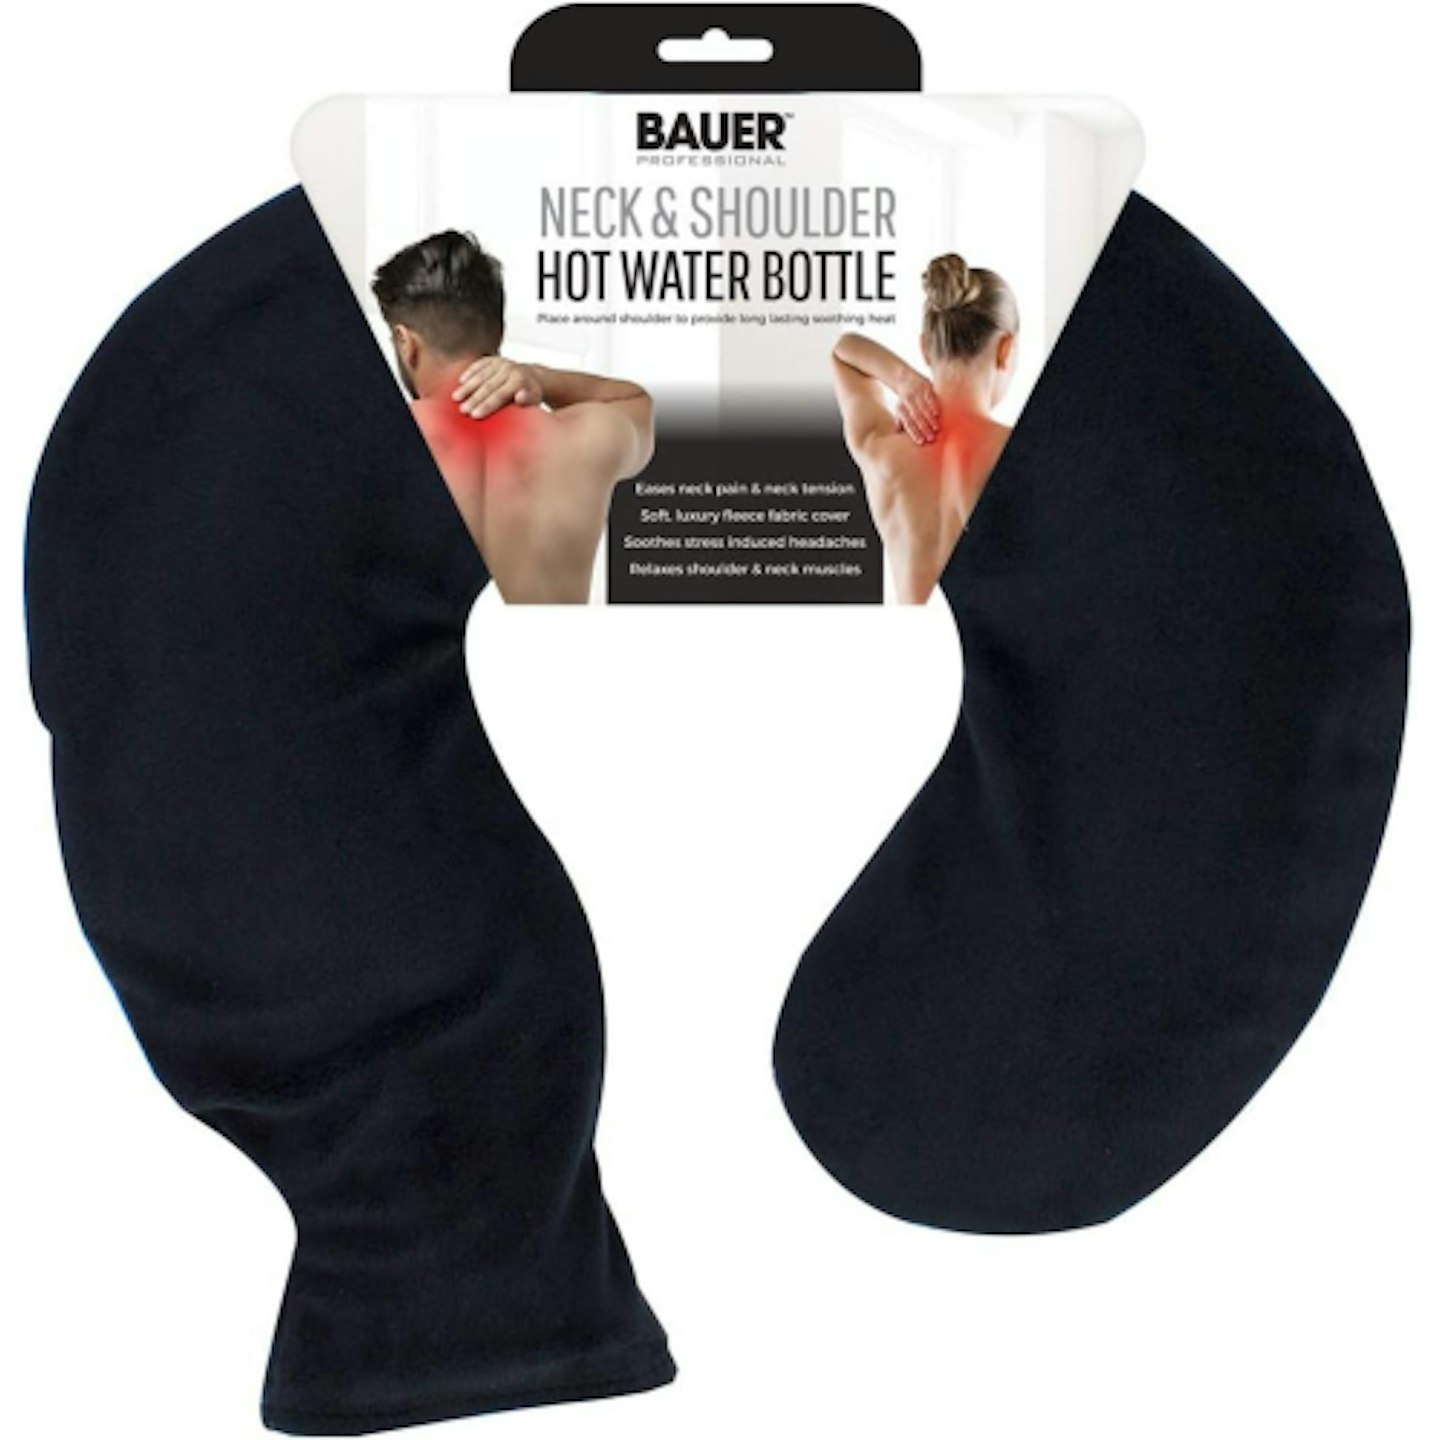 Bauer hot water bottle 